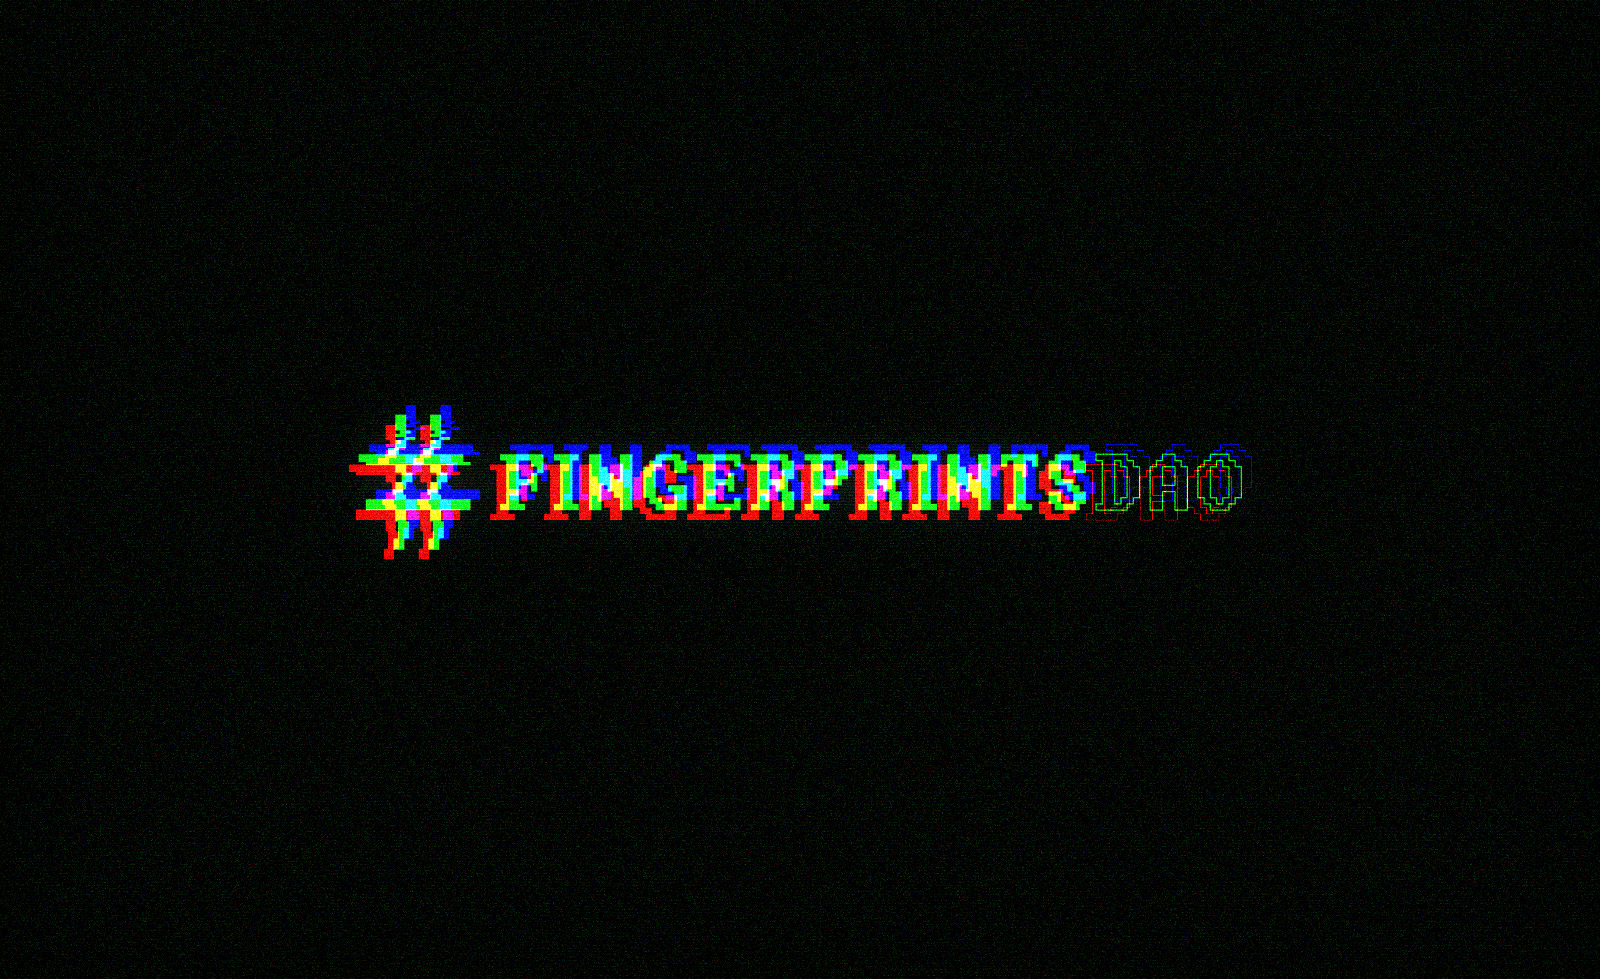 fingerprintsdao glitch logo screenshot